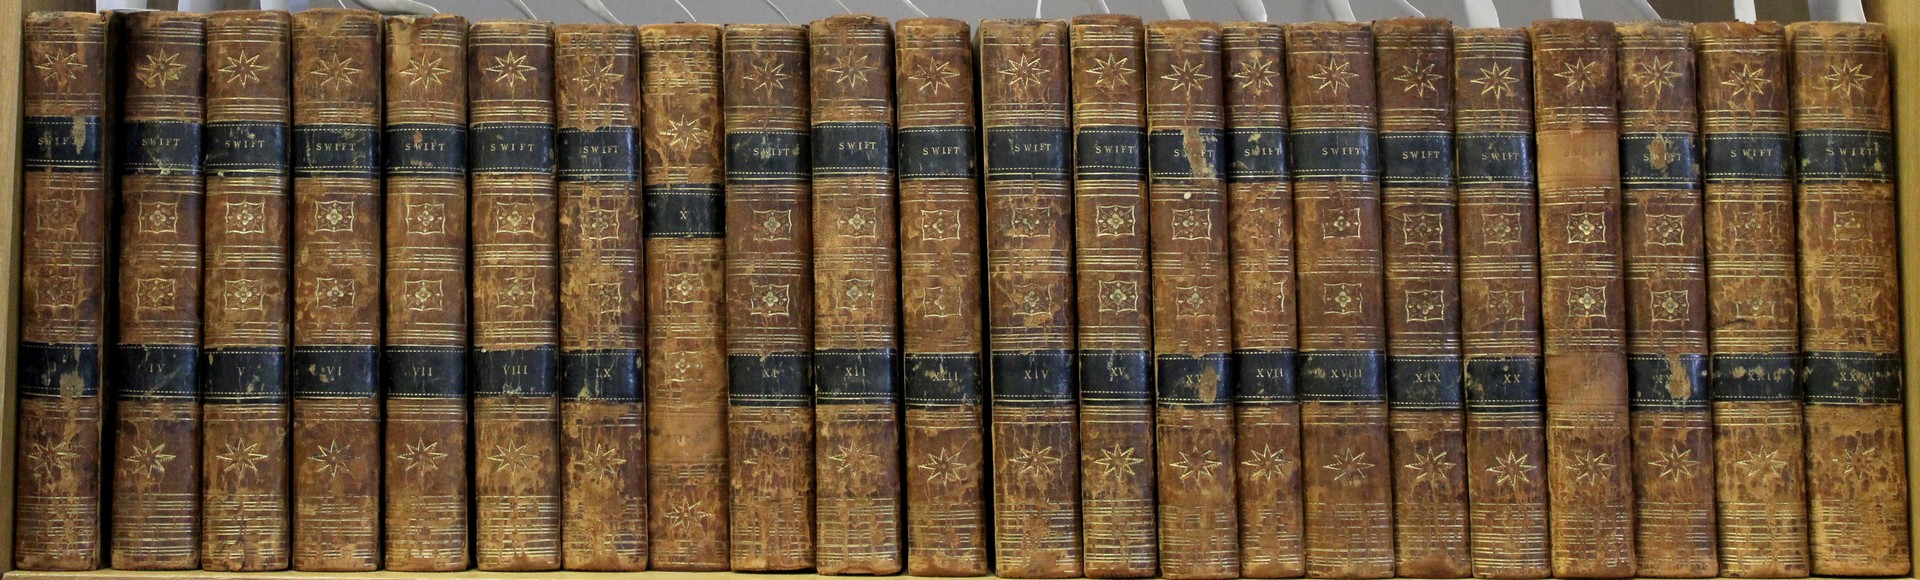 JONATHAN SWIFT: THE WORKS, ed Thomas Sheridan, London printed for J Johnson et al, 1803, 24 vols